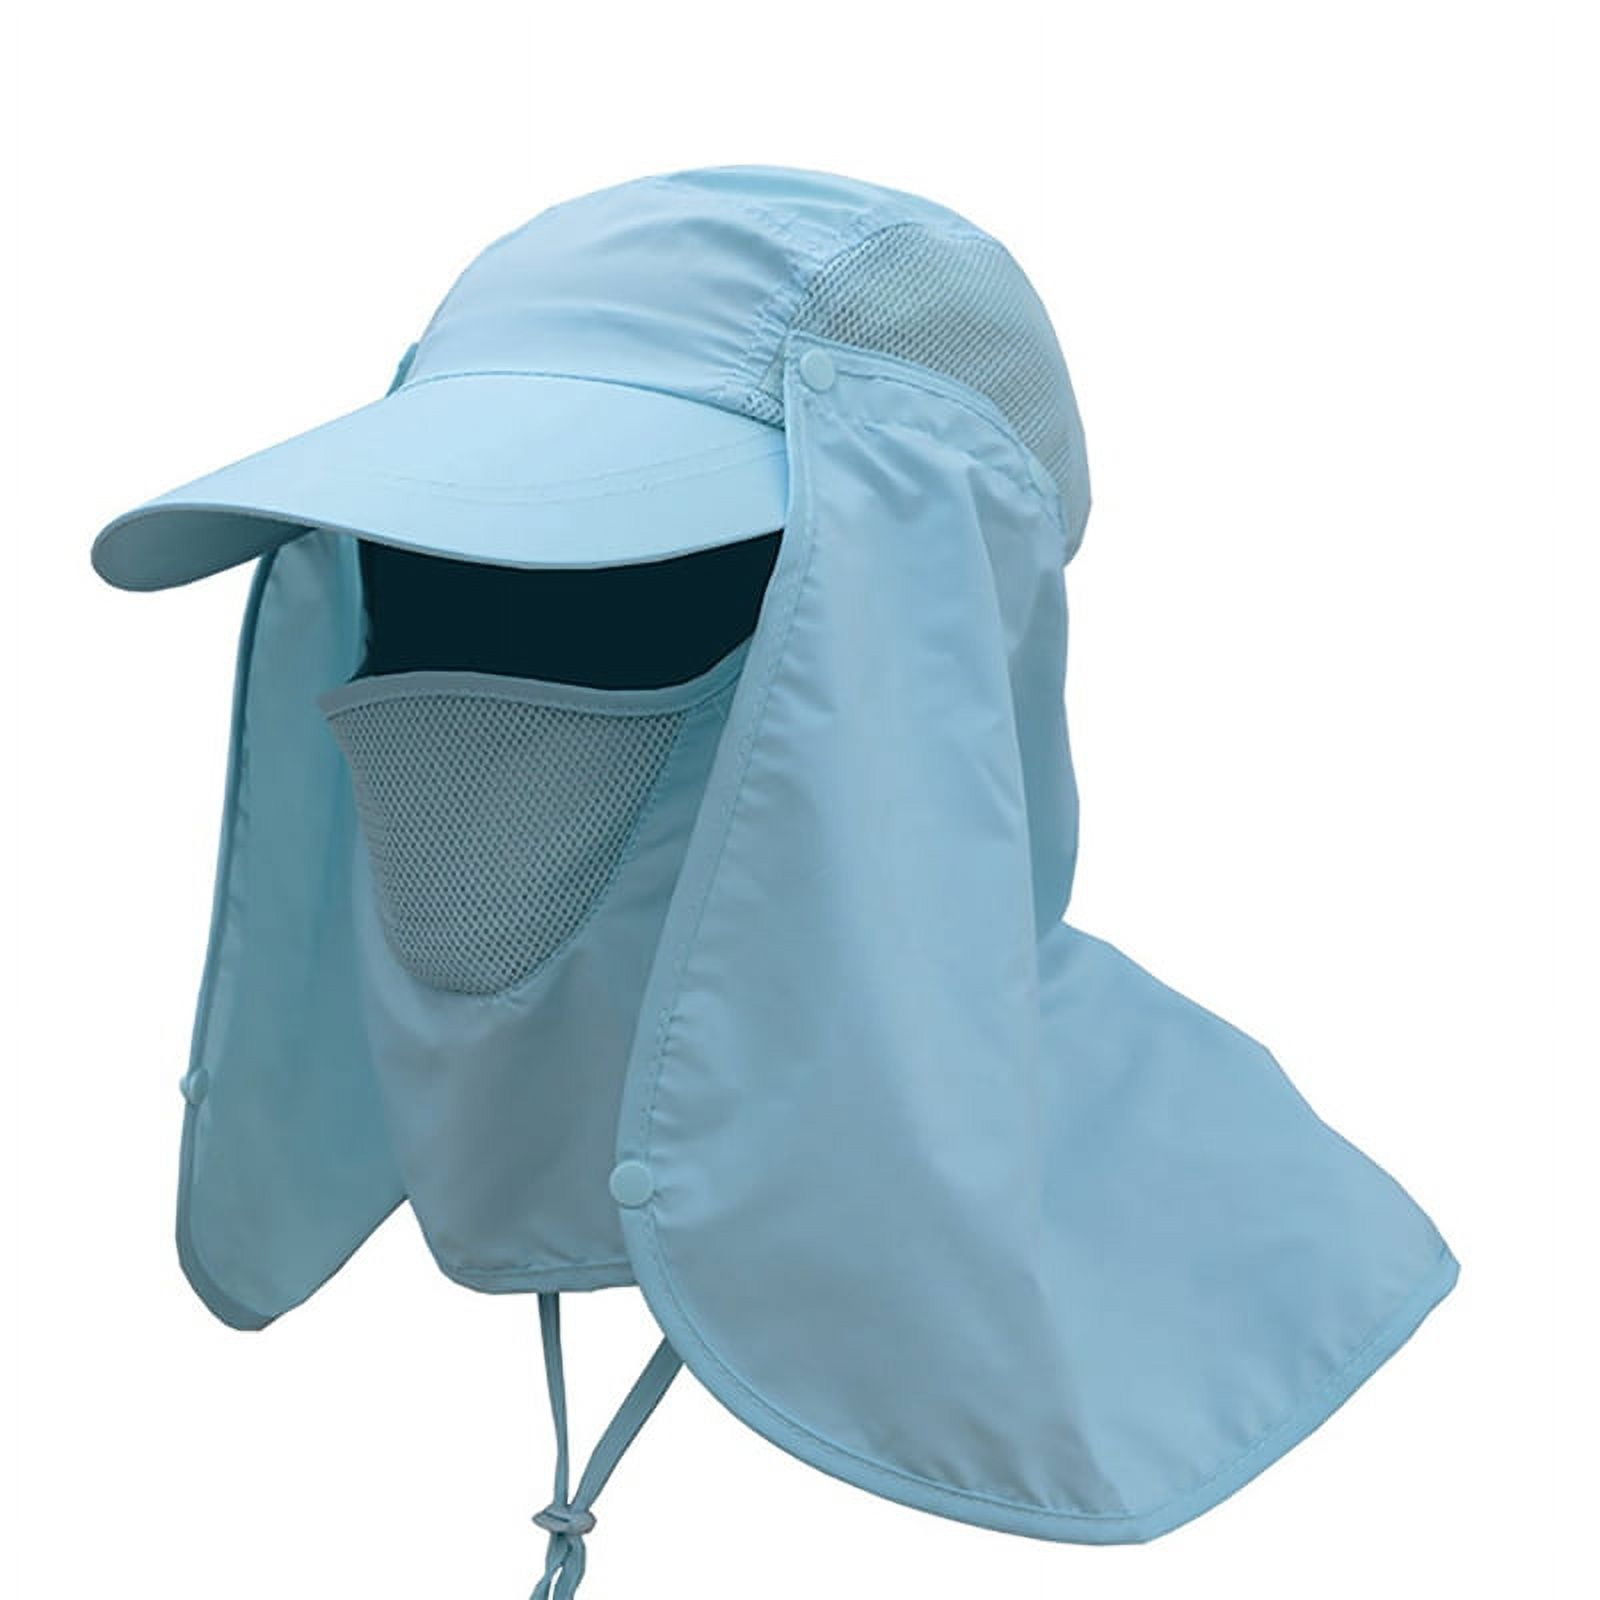 RAPALA 3D LOGO Fishing Hat fishing cap Breathable Outdoor Sports Visor  Baseball Golf Cap Adjustable Summer